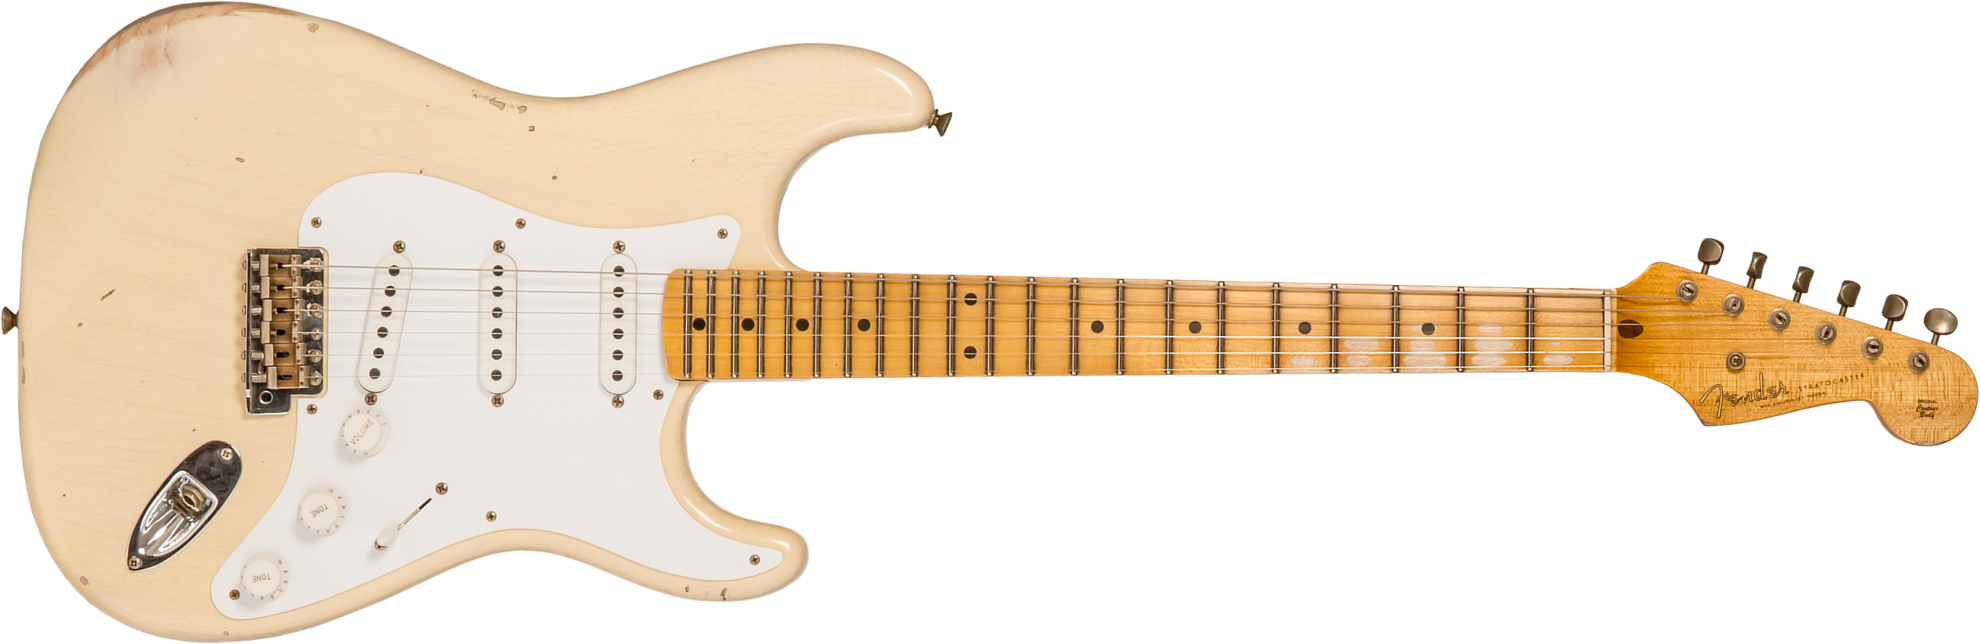 Fender Custom Shop Strat 1954 70th Anniv. 3s Trem Mn #xn4382 - Relic Vintage Blonde - Str shape electric guitar - Main picture